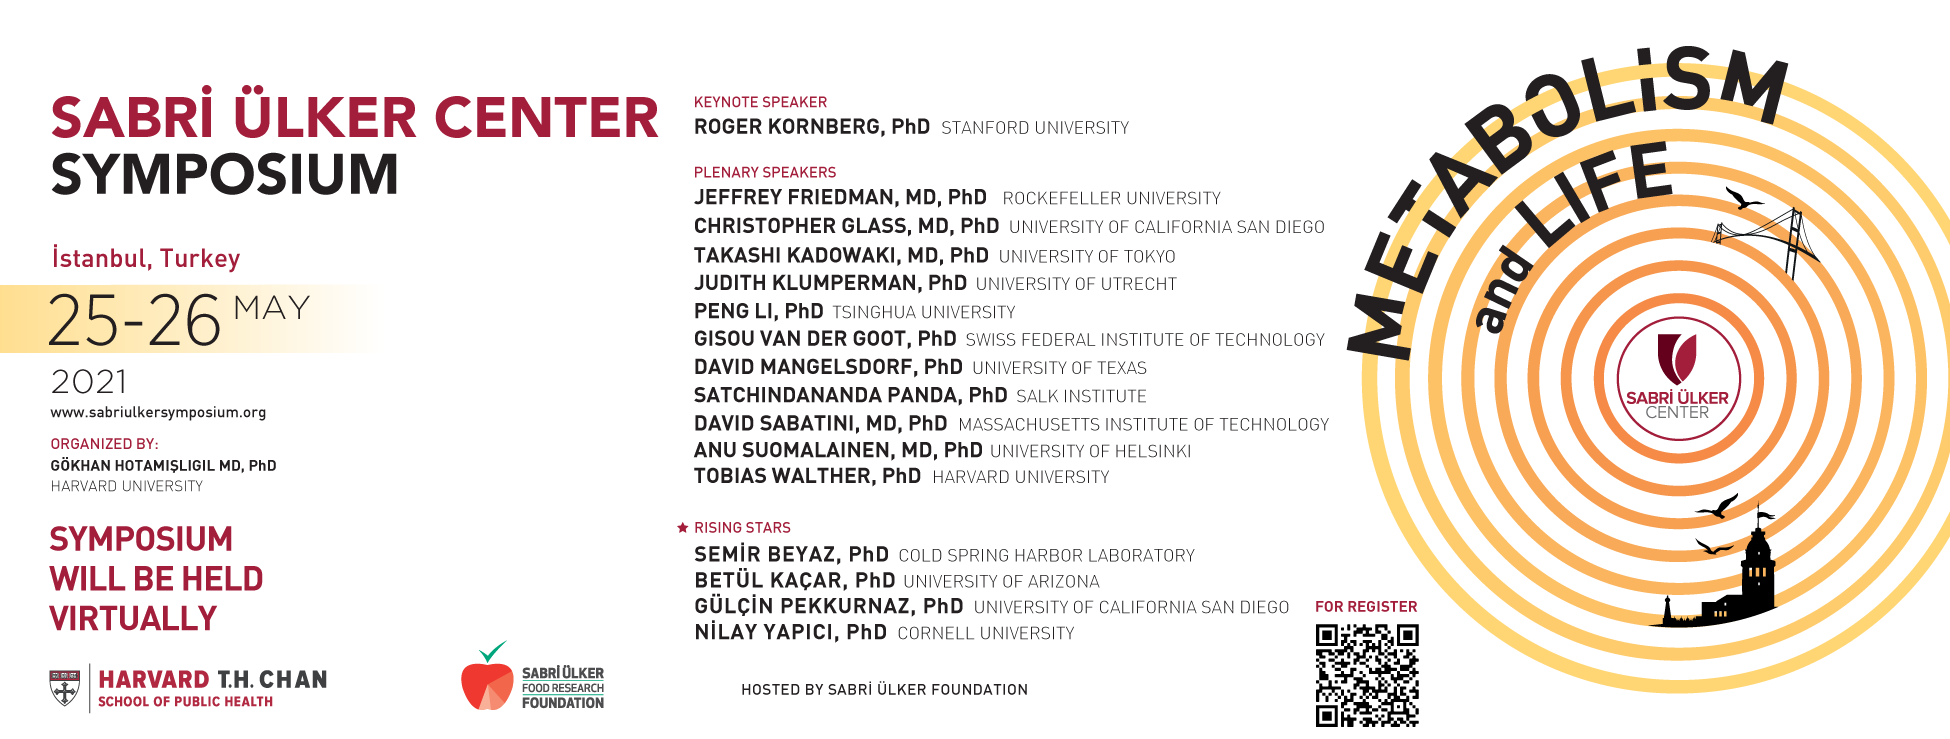 Sabri Ulker Center Symposium